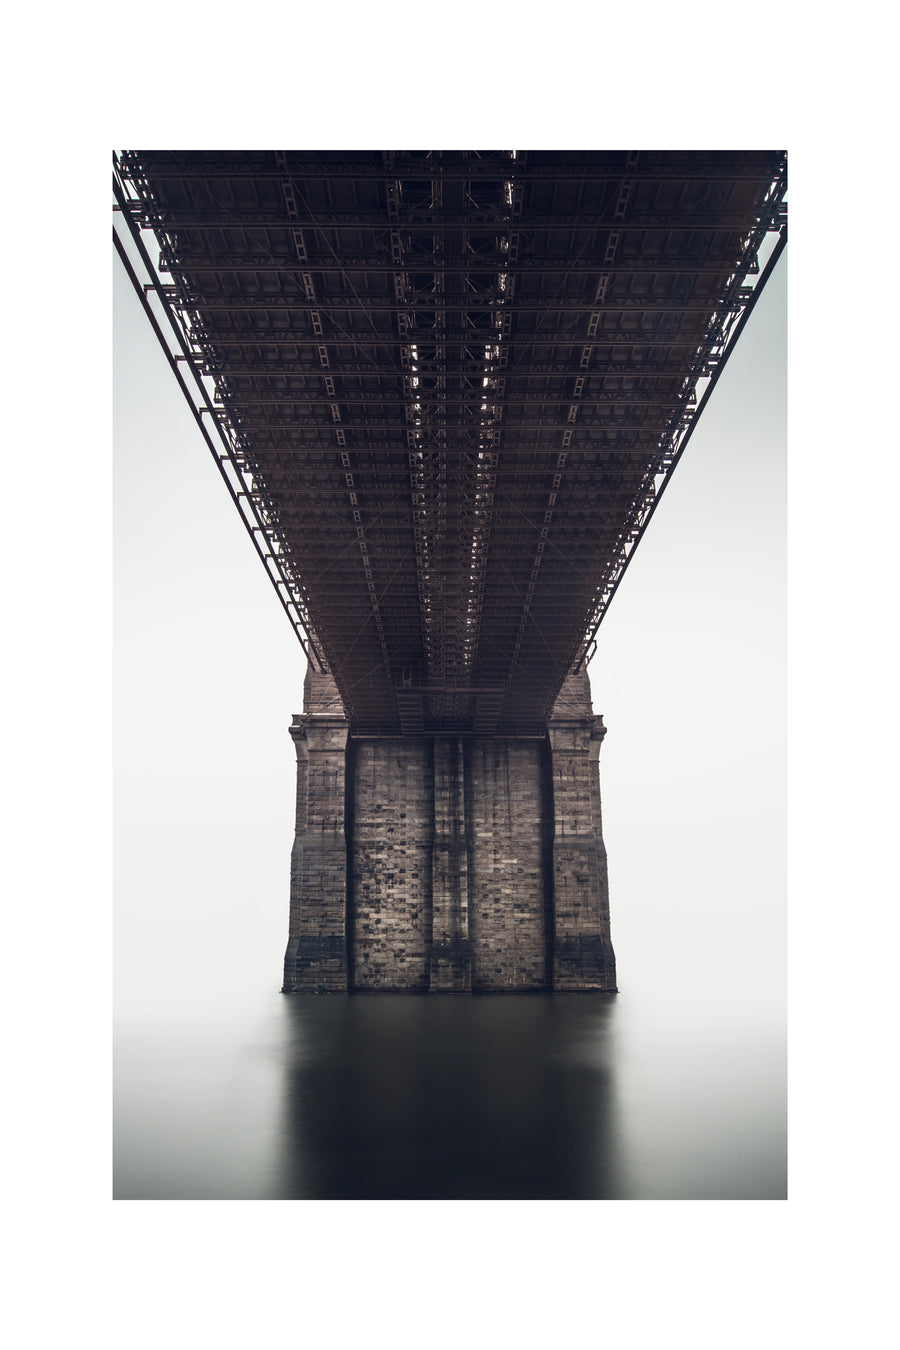 Brooklyn Bridge 2017